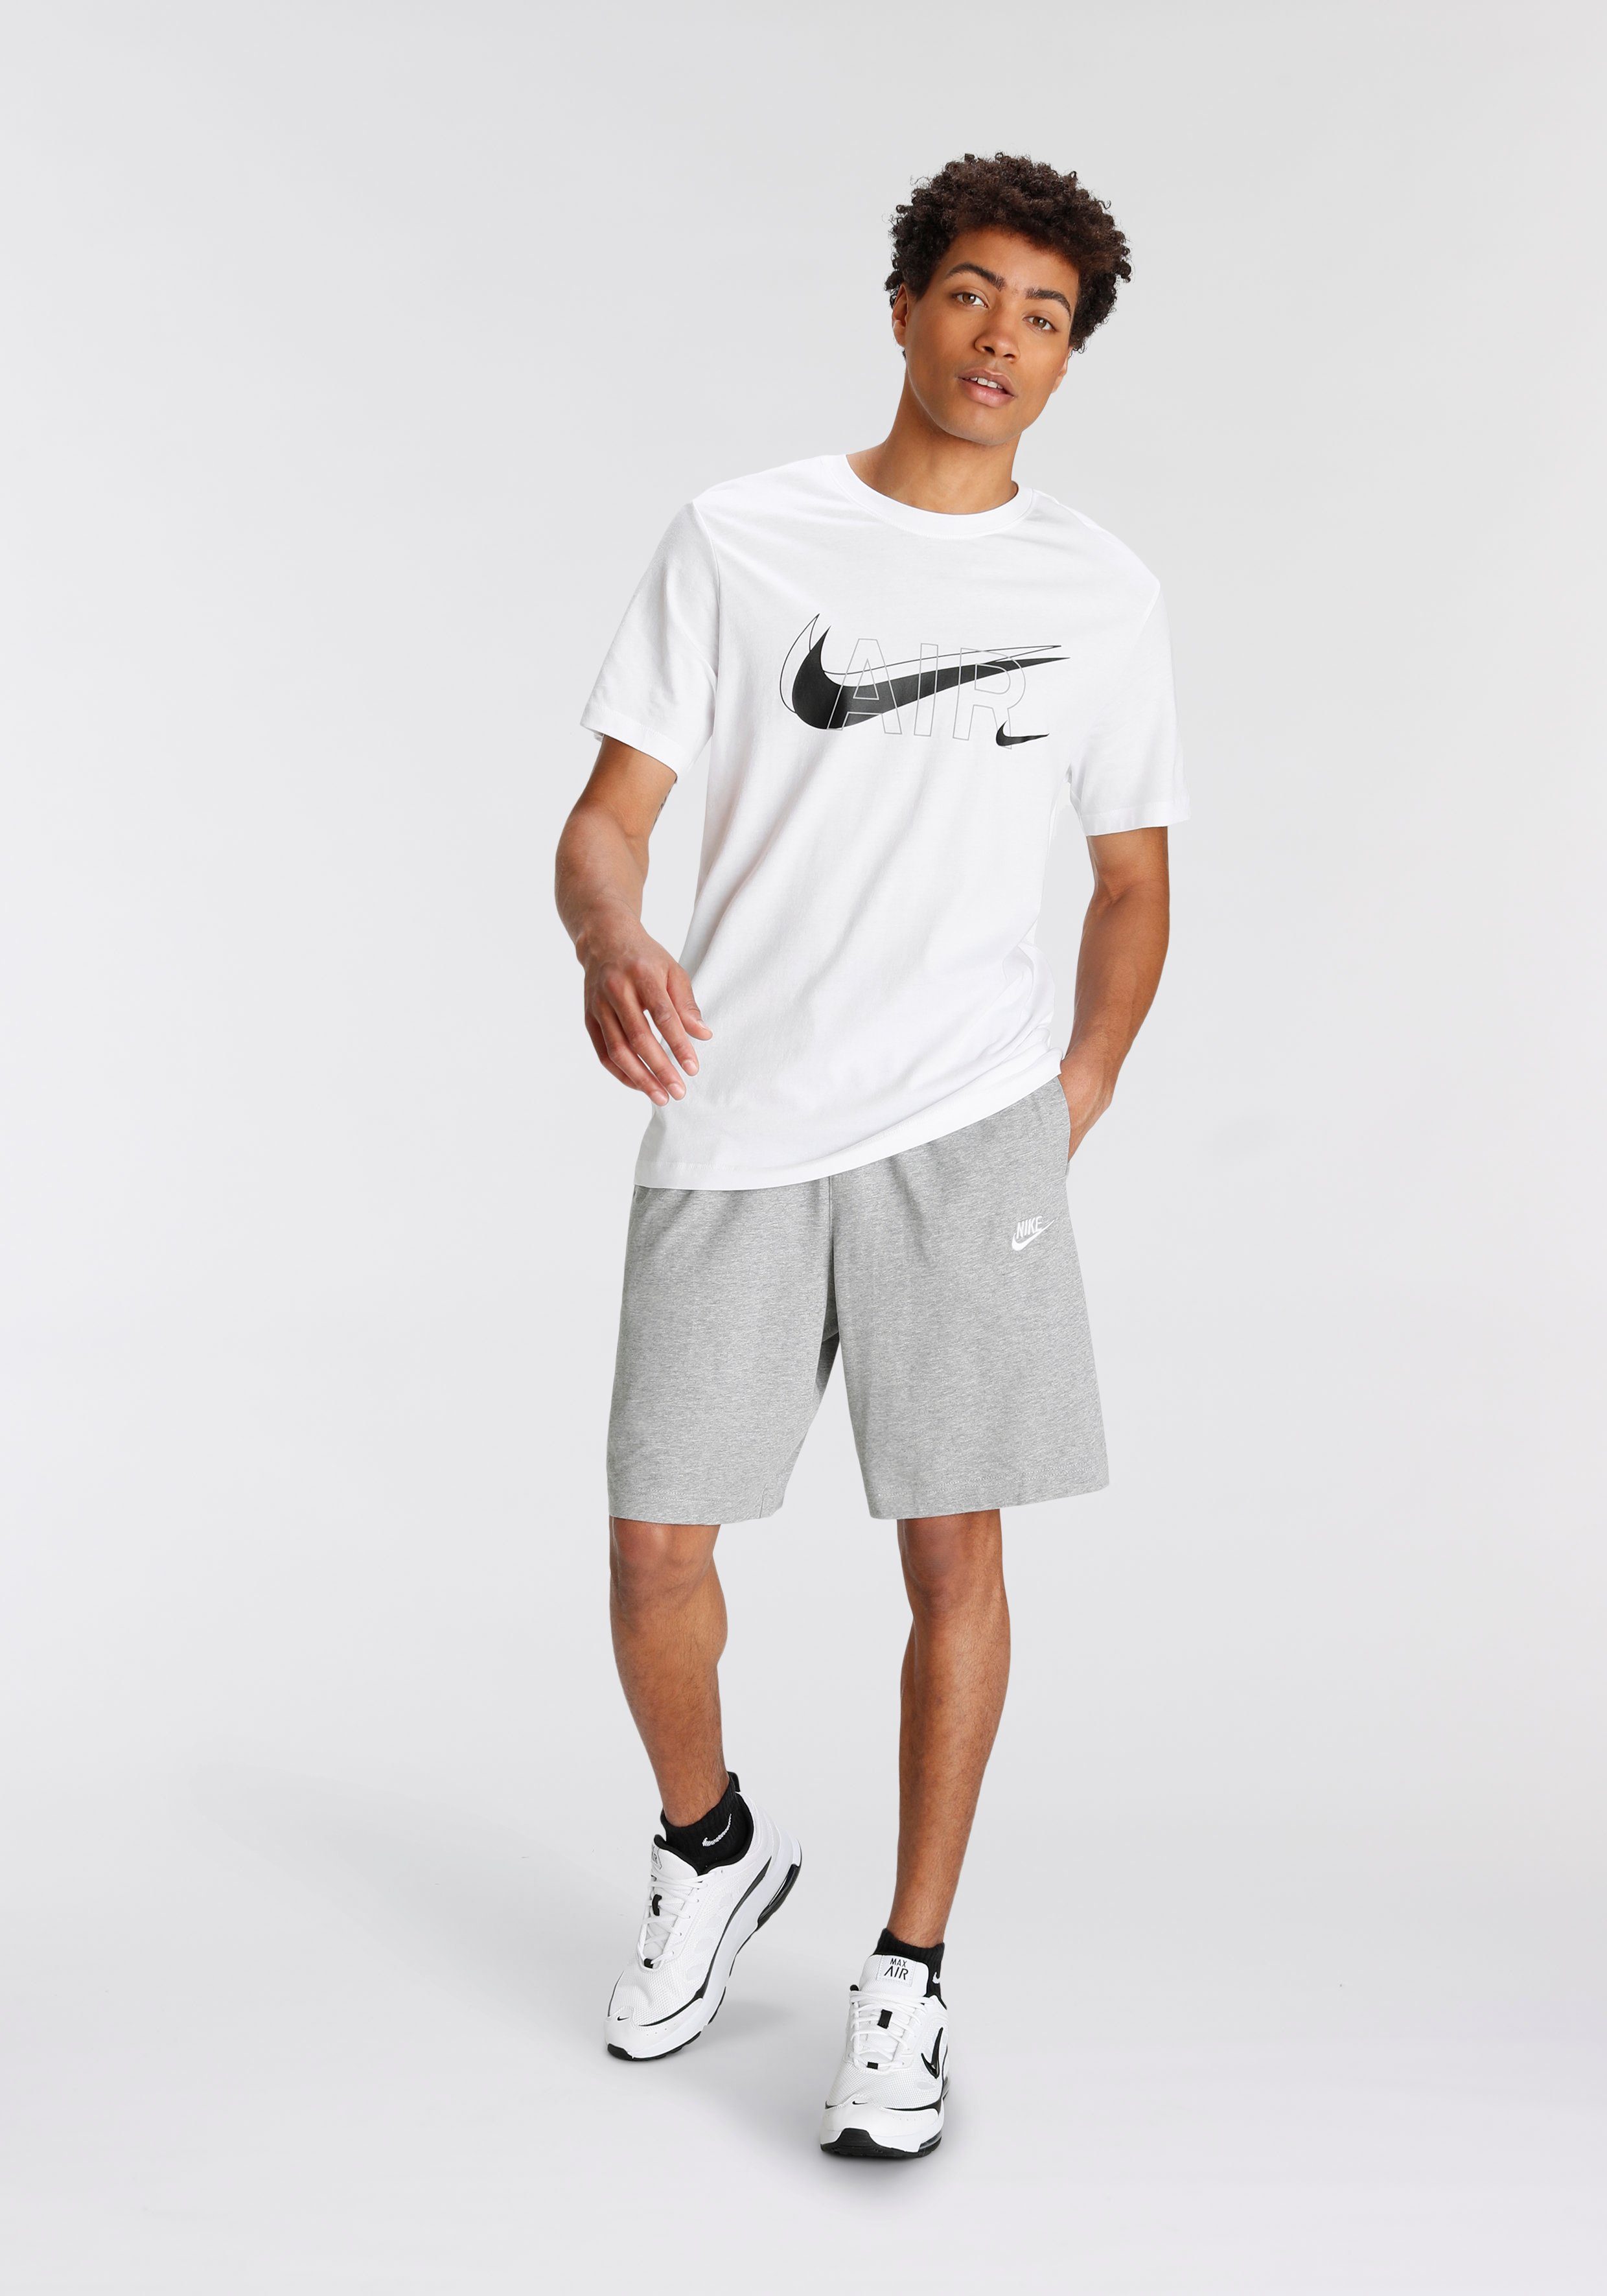 Men's Club Sportswear Shorts hellgrau-meliert Nike Shorts